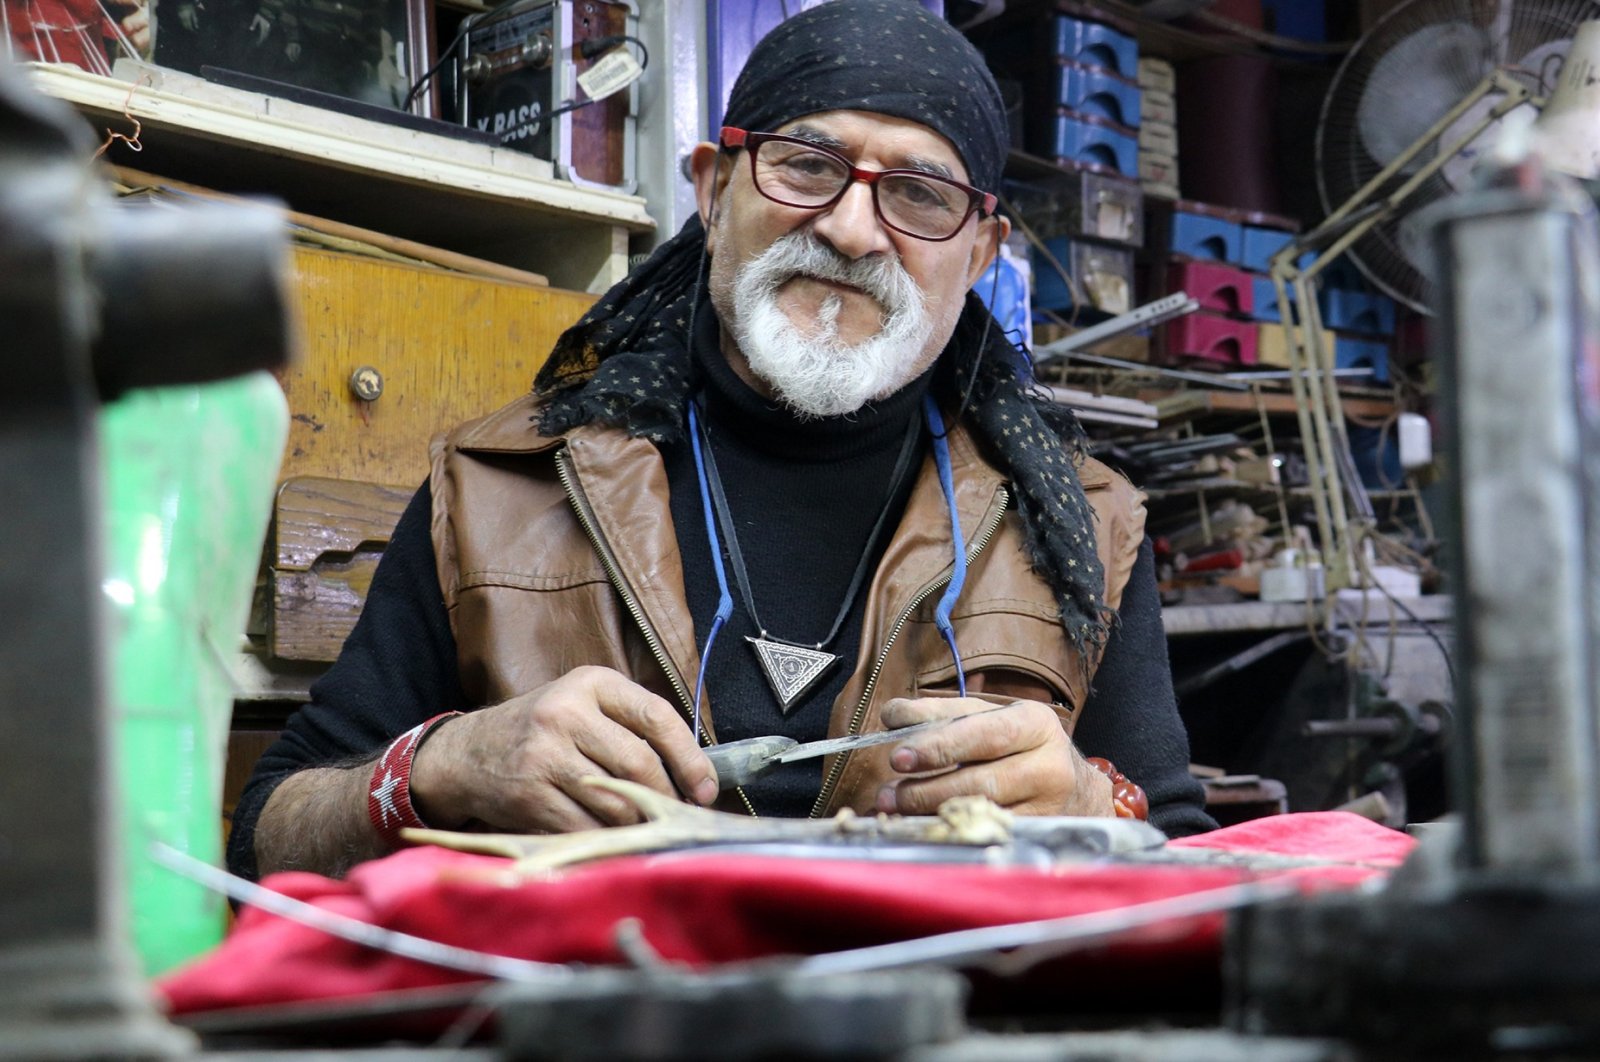 Erdoğan Güzel, maker of world's smallest knives, poses for a photo in his workshop, in Sivas, Turkey, Nov. 10, 2021. (IHA Photo)